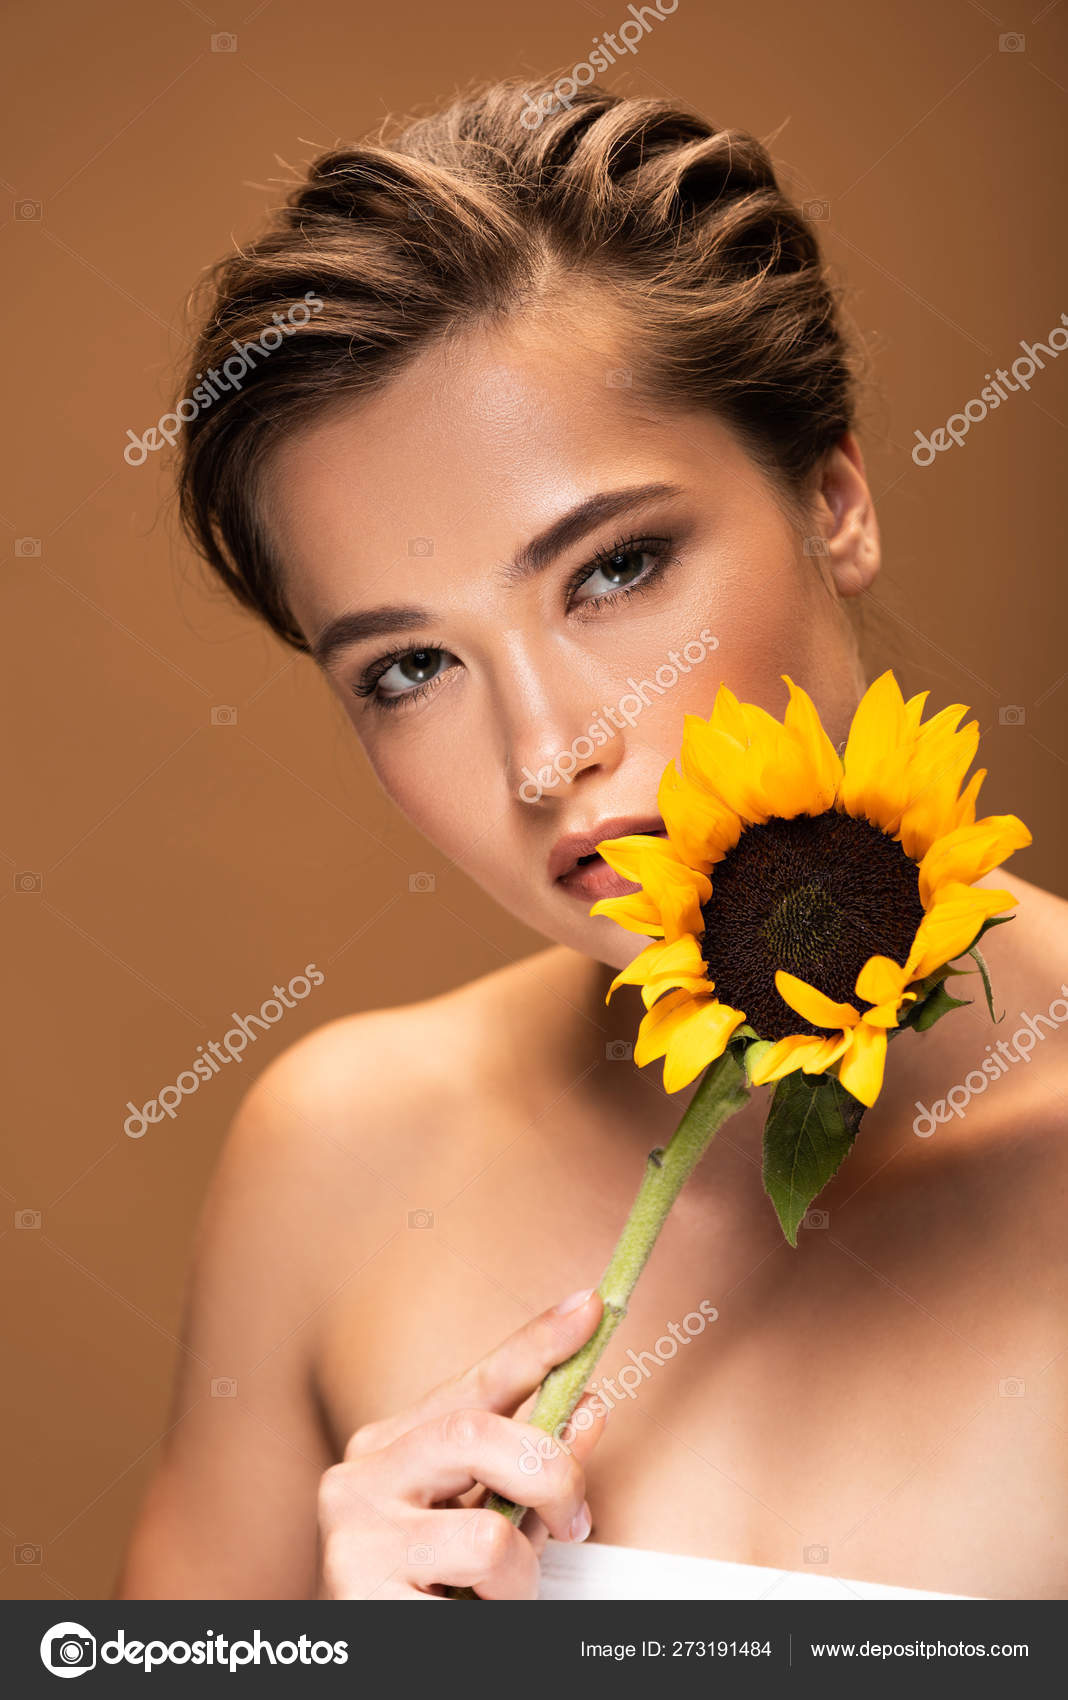 Sunflower - nude photos